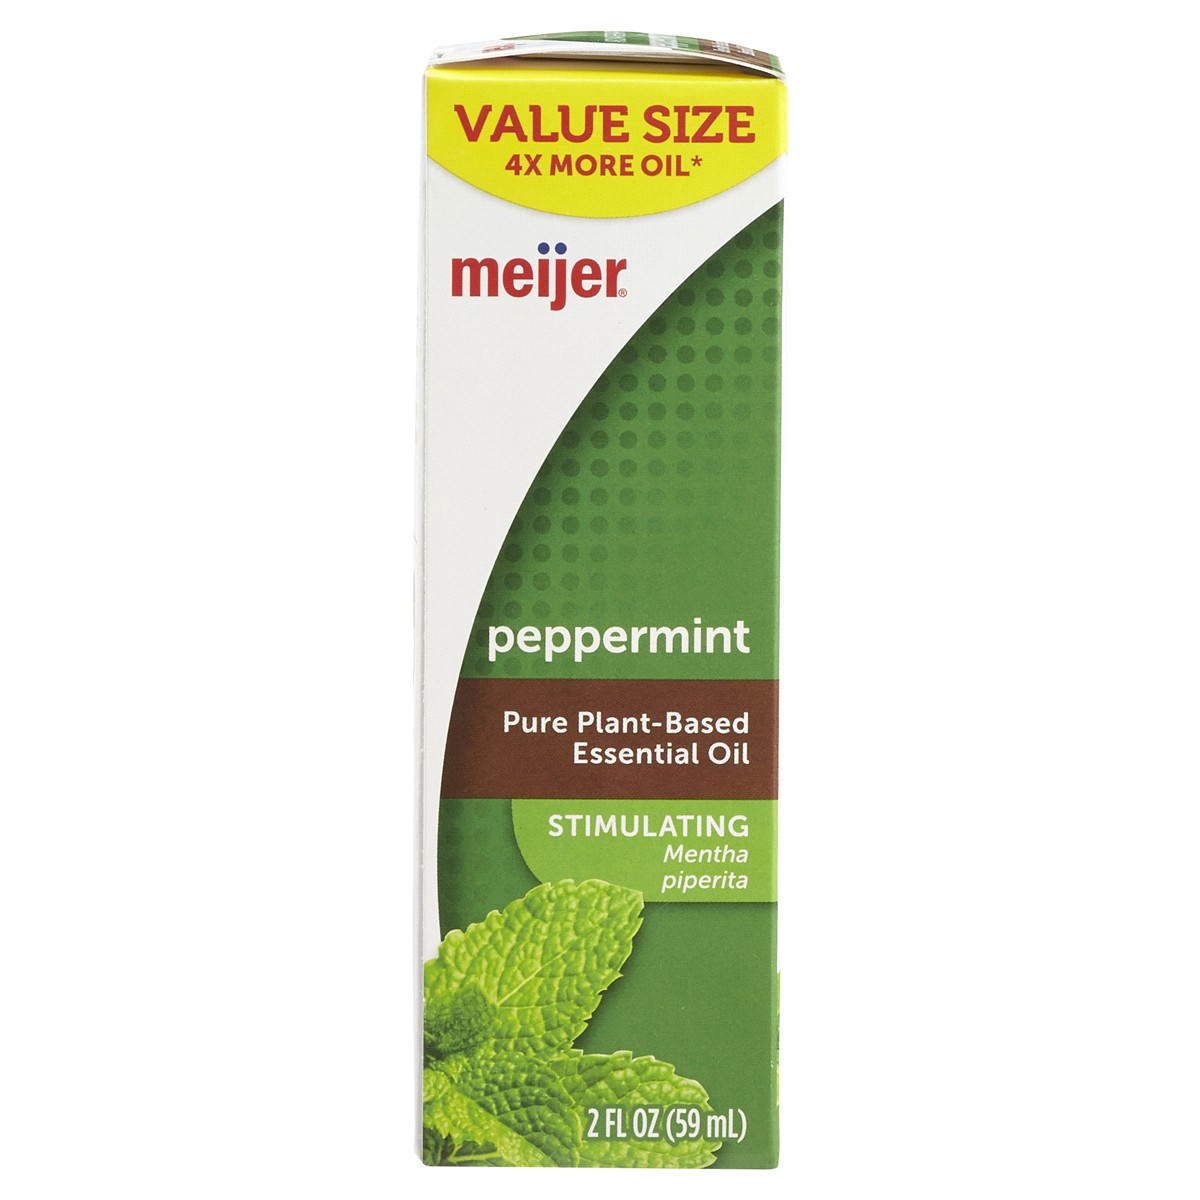 slide 13 of 29, MEIJER WELLNESS Meijer Aromatherapy Peppermint Essential Oil, Value Size, 2 oz